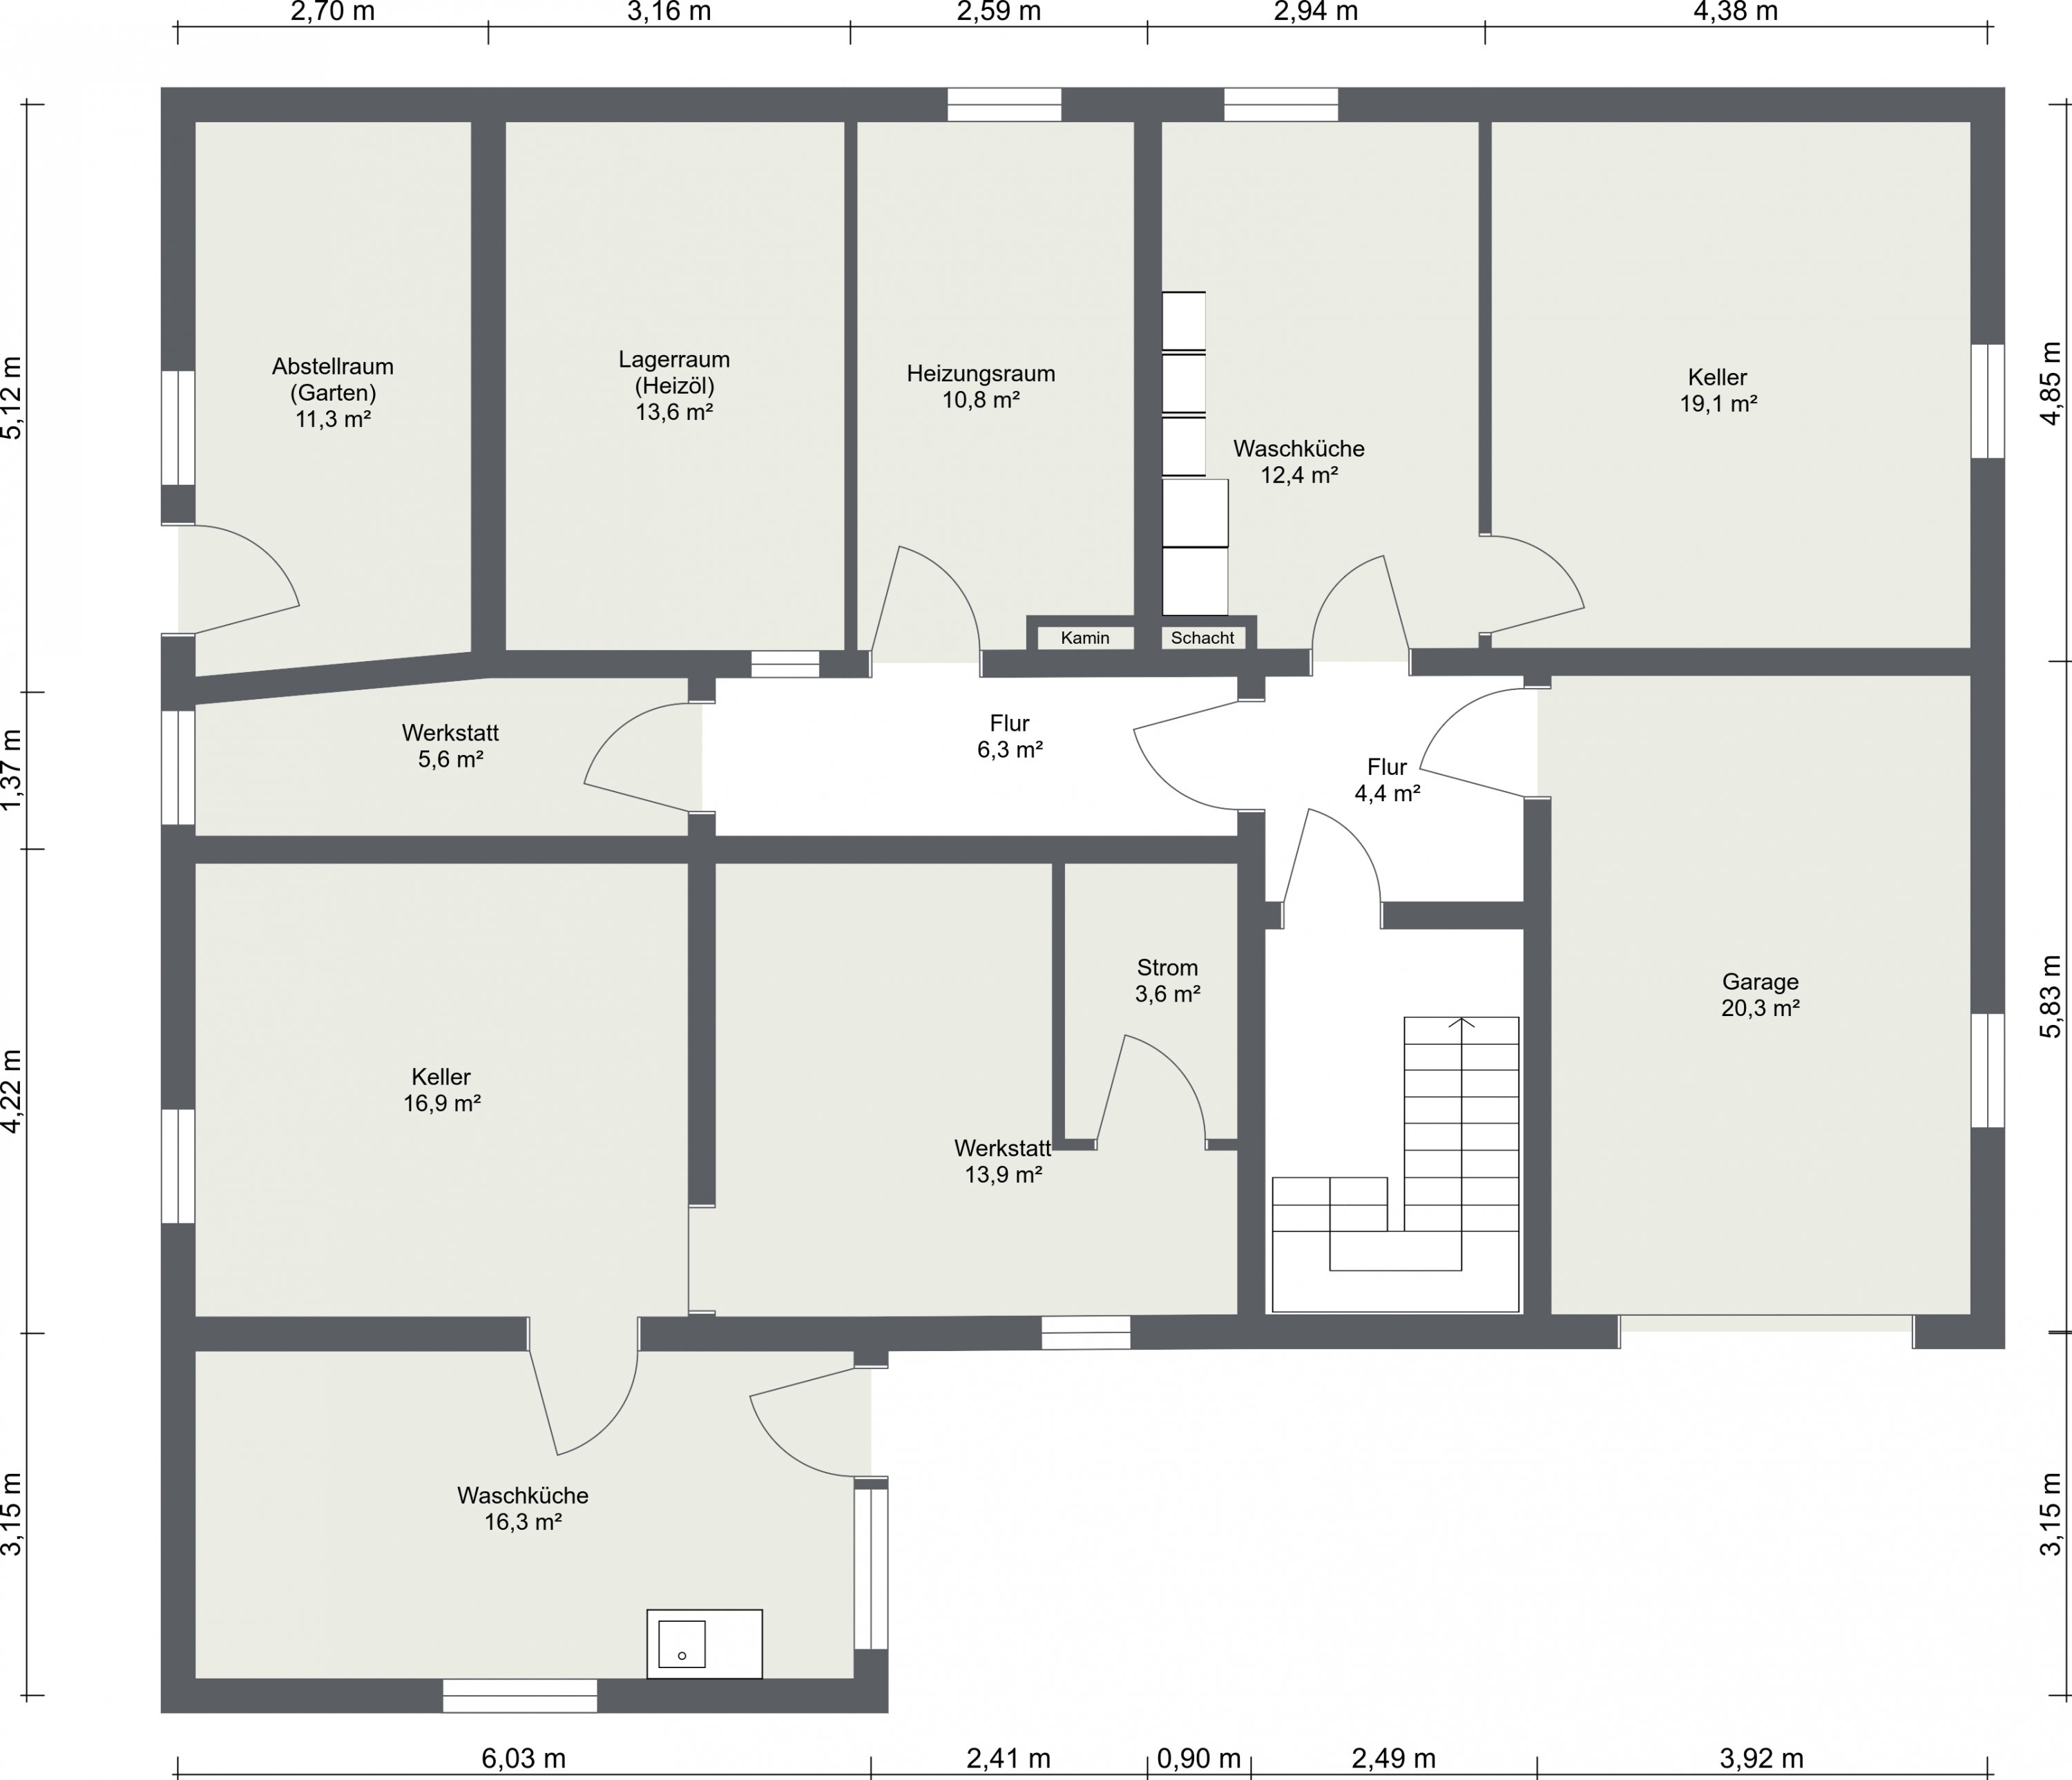 altbausanierung-1966-zweifamilienhaus-skizze-grundriss-274116-4.jpeg